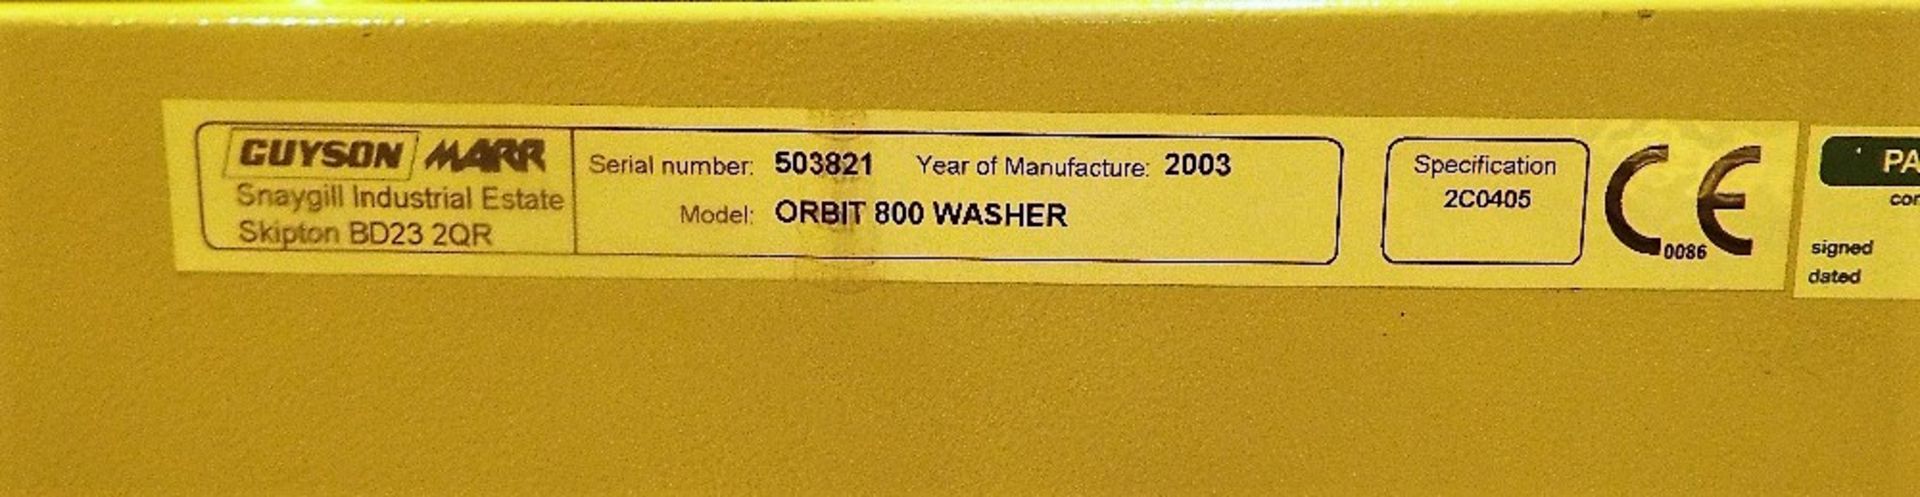 Guyson Marr Orbit 800 Parts Washing Machine - Image 9 of 13